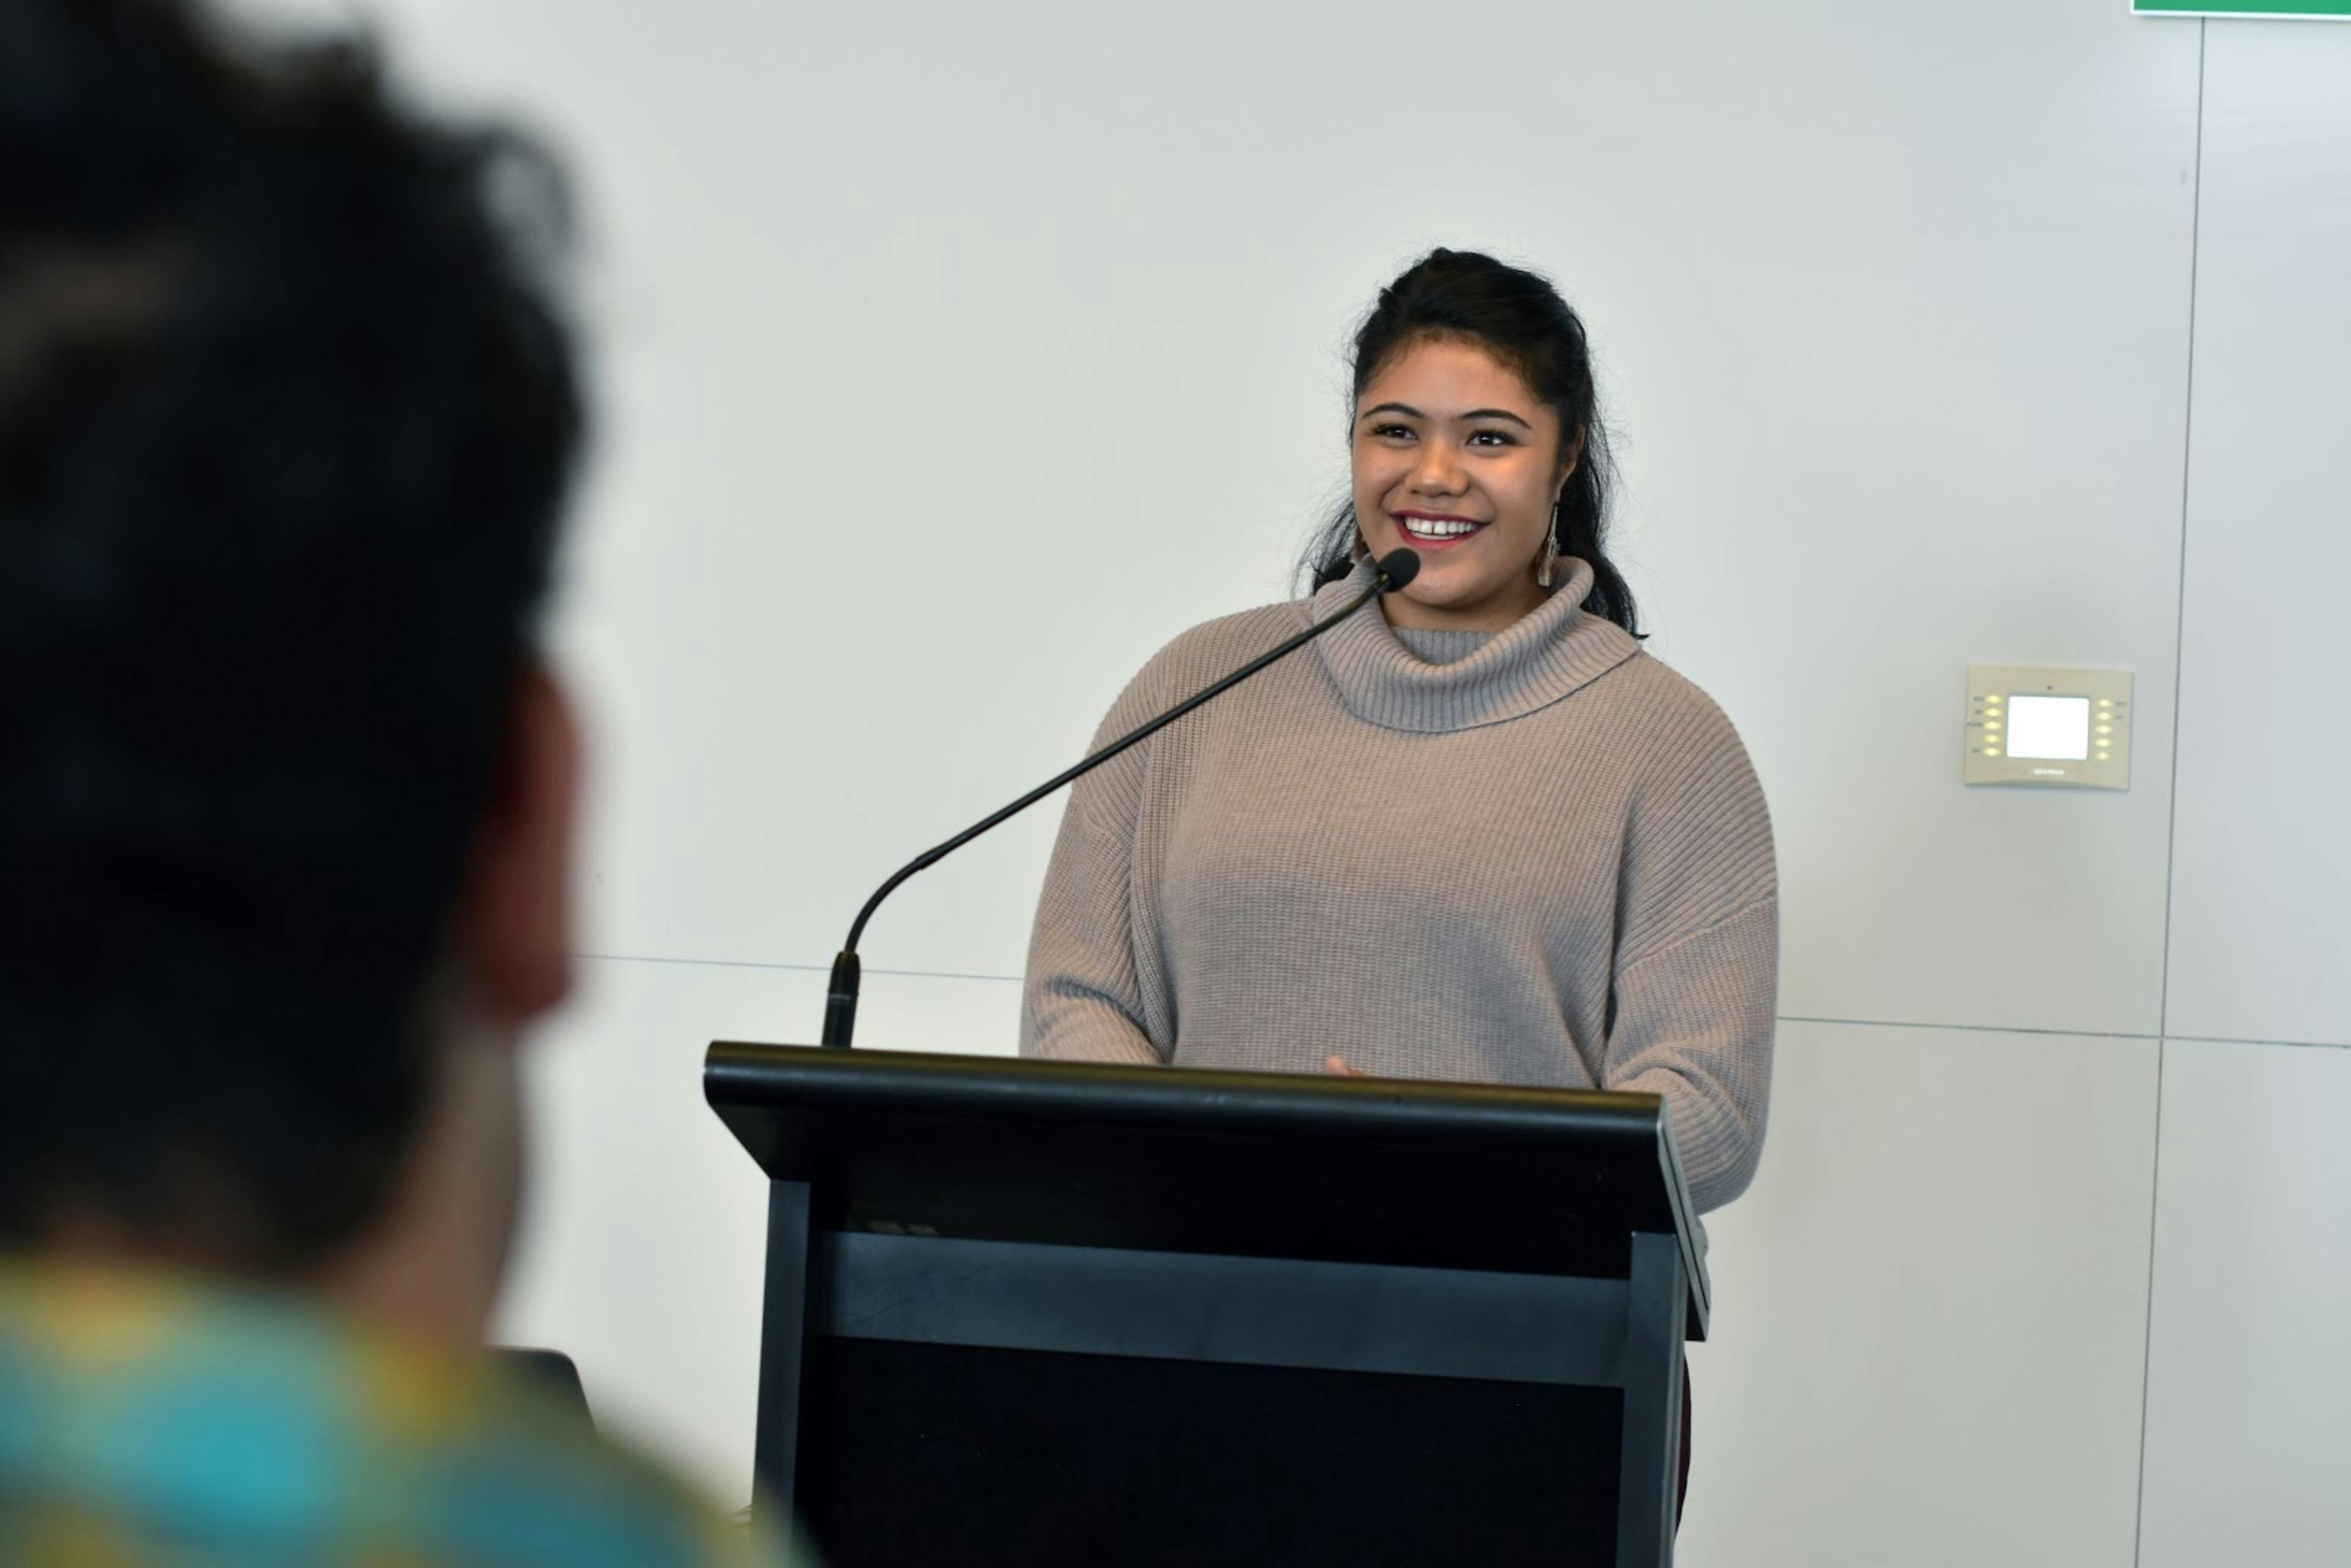 Tuimaleali'ifano Fiso speaks at Te Hiringa Tamiriki launch.